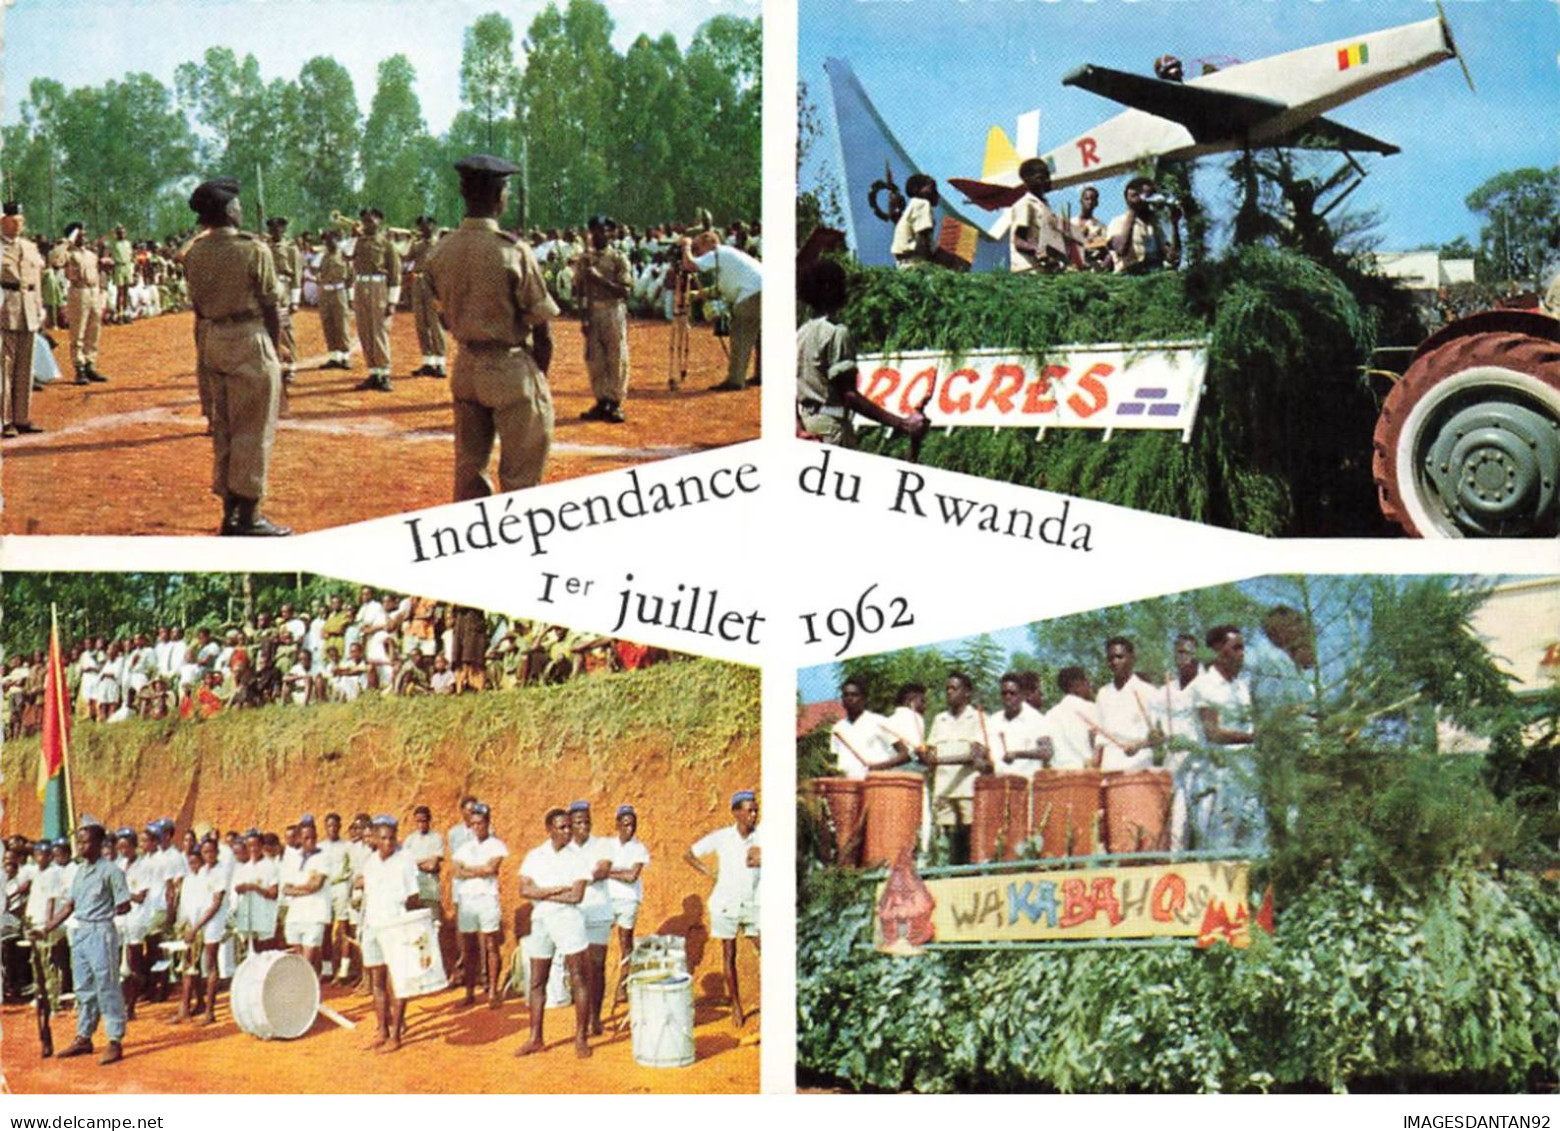 RWANDA AM#DC456 MULTI-VUES INDEPENDANCE DU RWANDA 1 ER JUILLET 1962 CHAR DU PROGRES DE LA LIBERTE TAMBOURS DE KITENKIRO - Ruanda